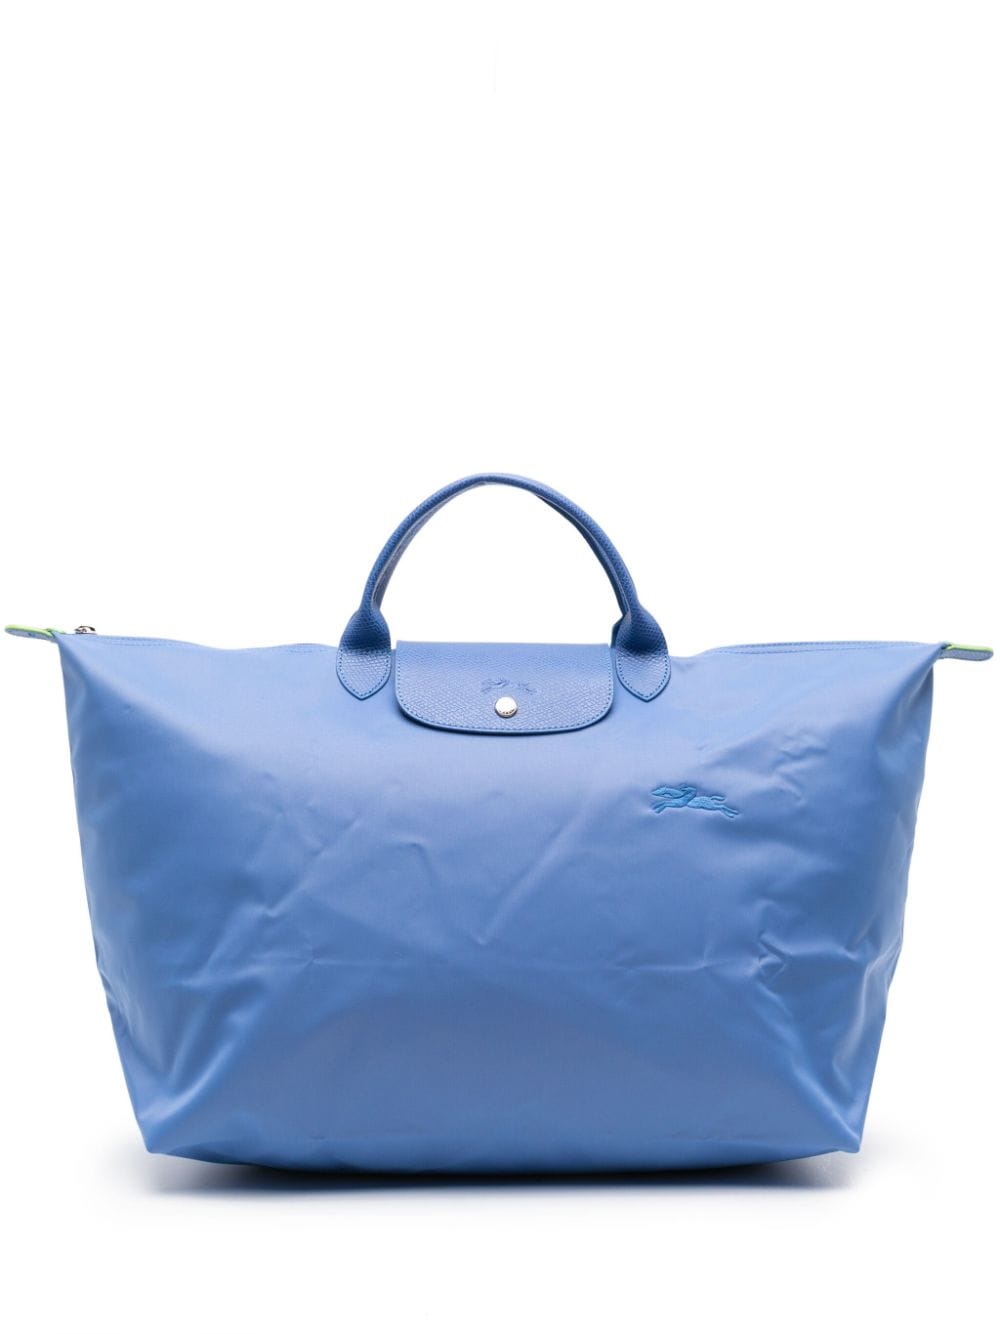 Longchamp Borsone Le Pliage piccolo - Blu